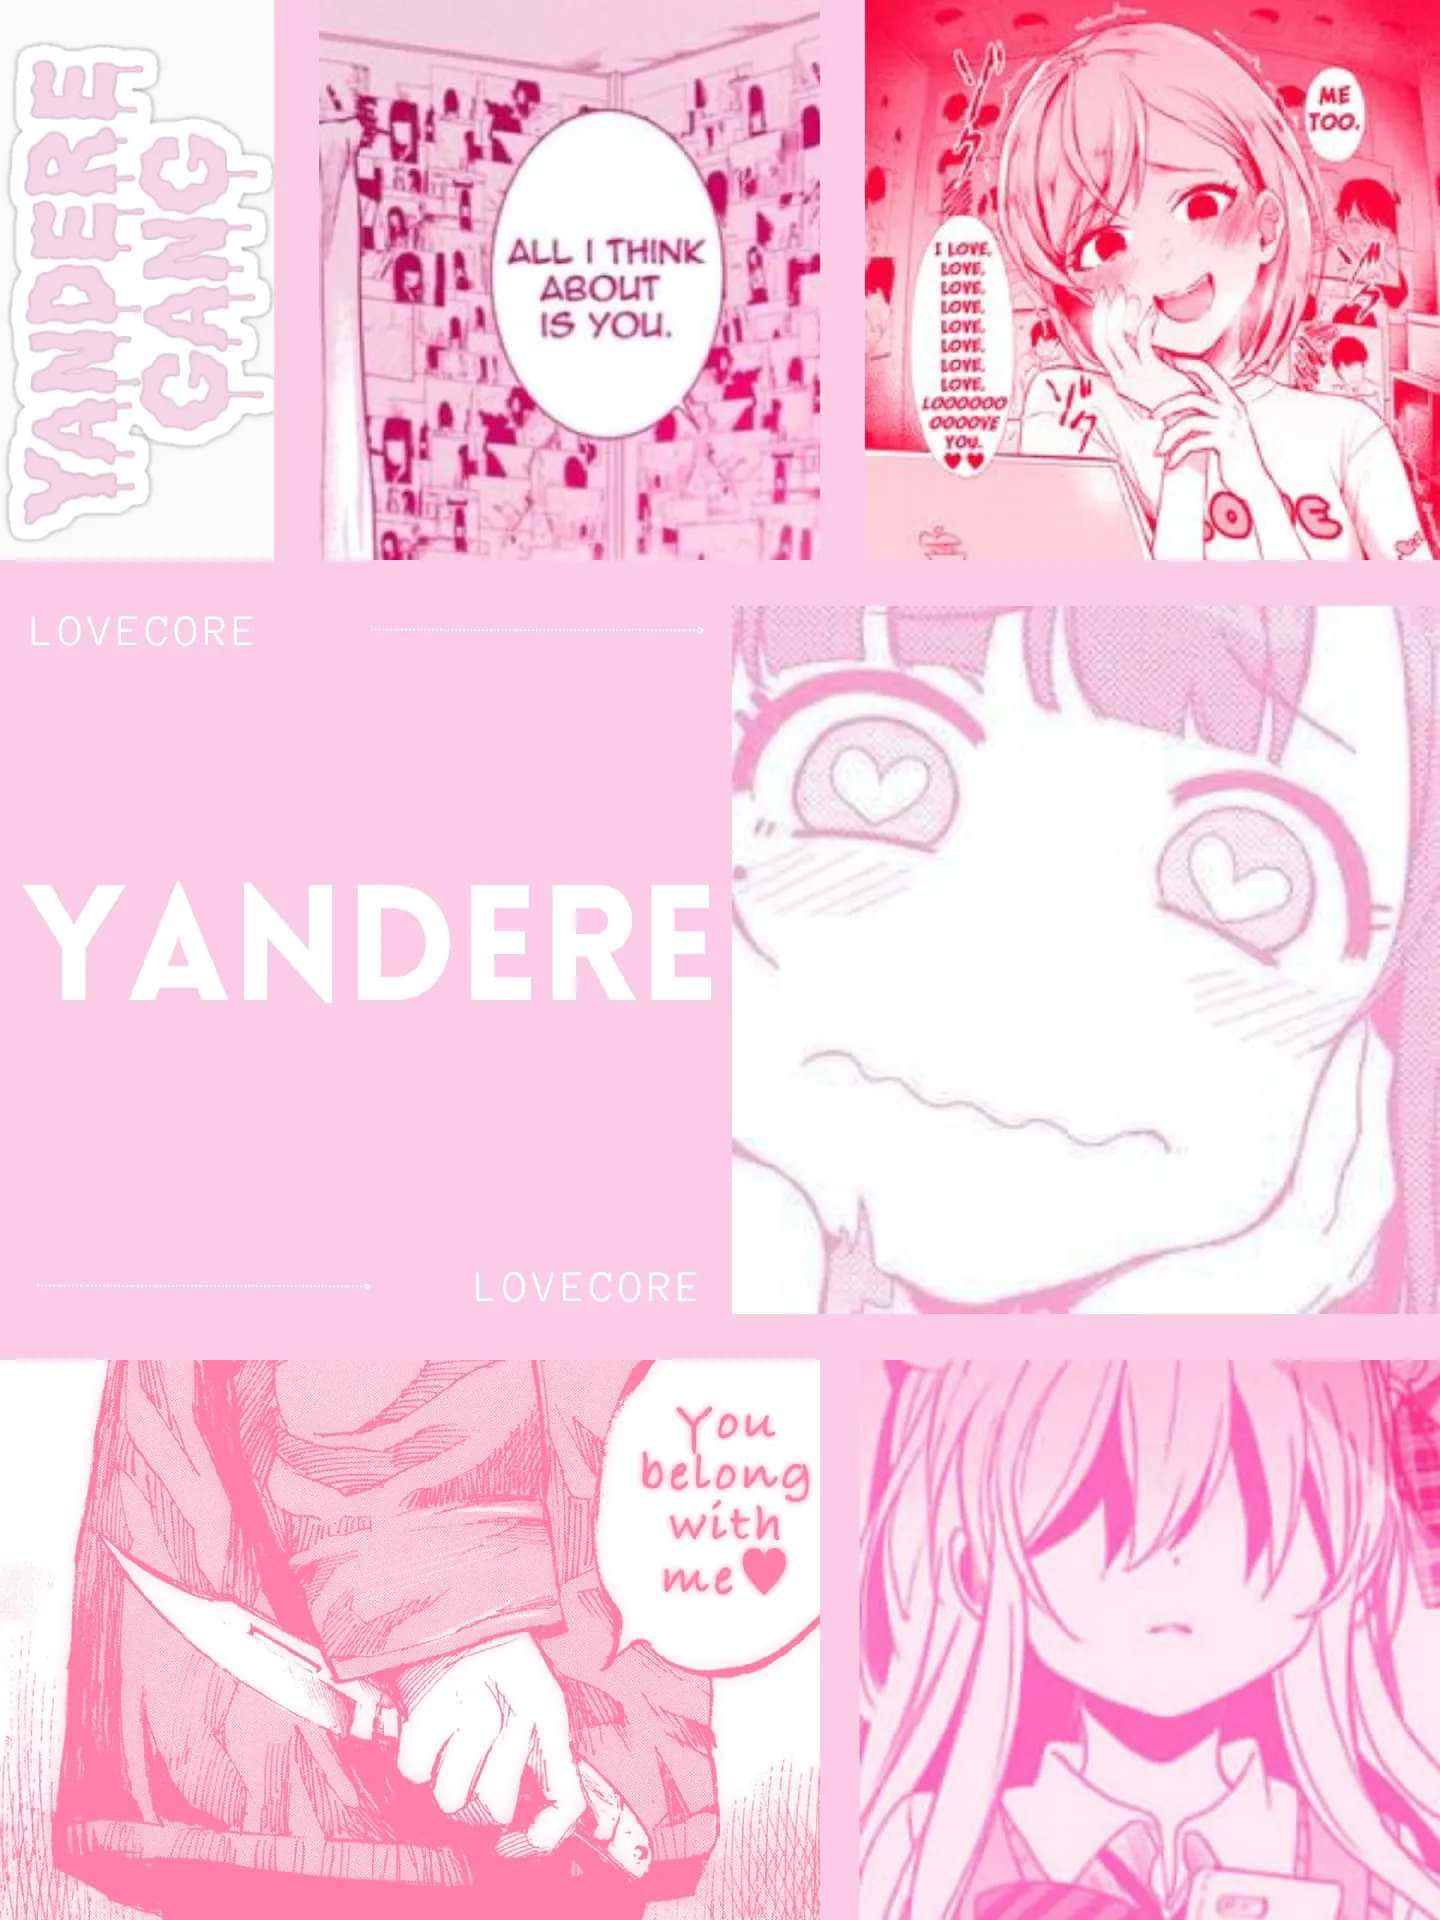 Lovecore Yandere Collage Pink Aesthetic.jpg Wallpaper